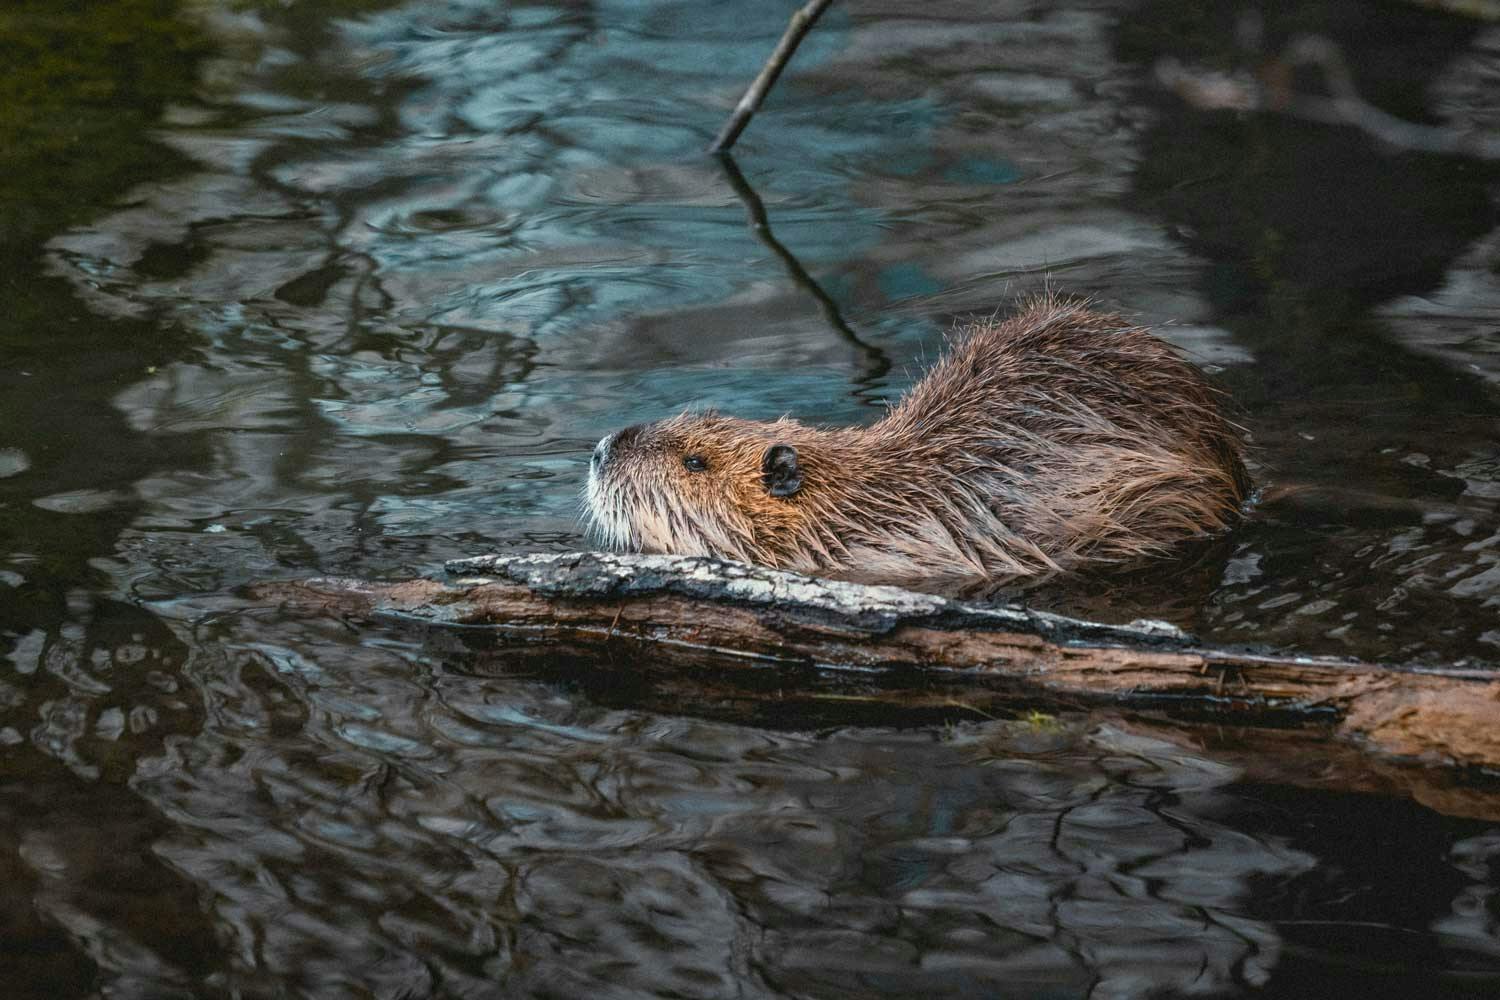 Beaver beavering away